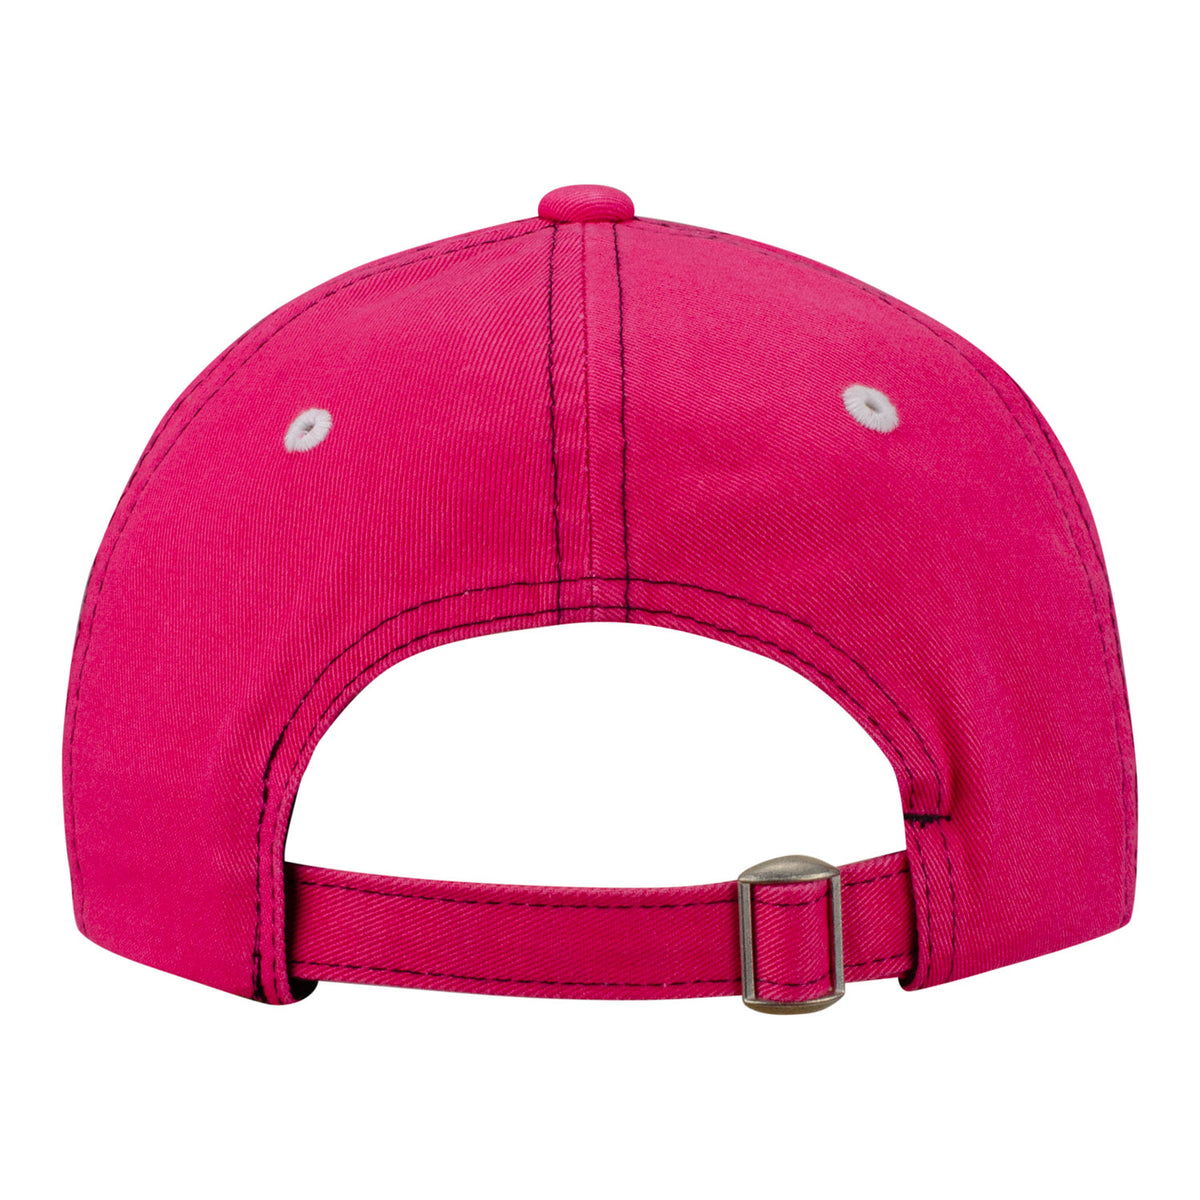 Mecum Auctions Ladies Pink Glitter Hat - Back View